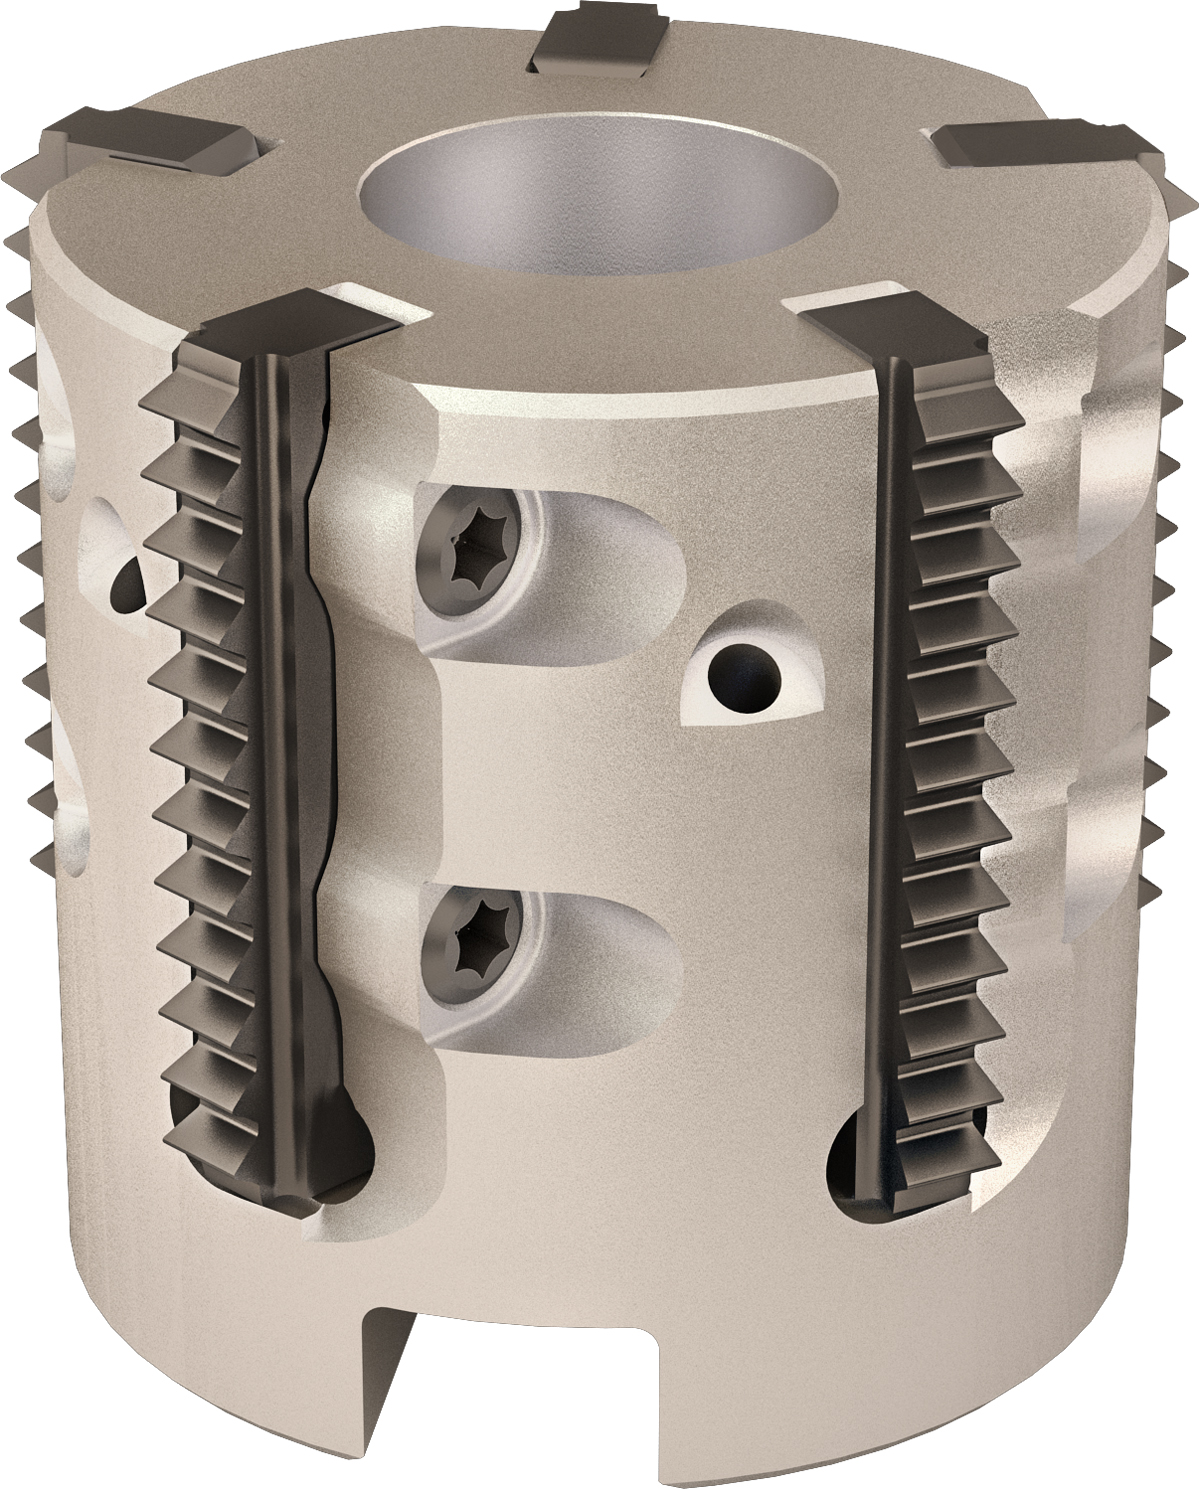 Mill for (mm) Milling Multi 36.4 16 Tool Shank (mm) Holders Compatibility Thread Insert R25 Cutting Flute Diameter Overhang 200 Diameter (mm) Shell